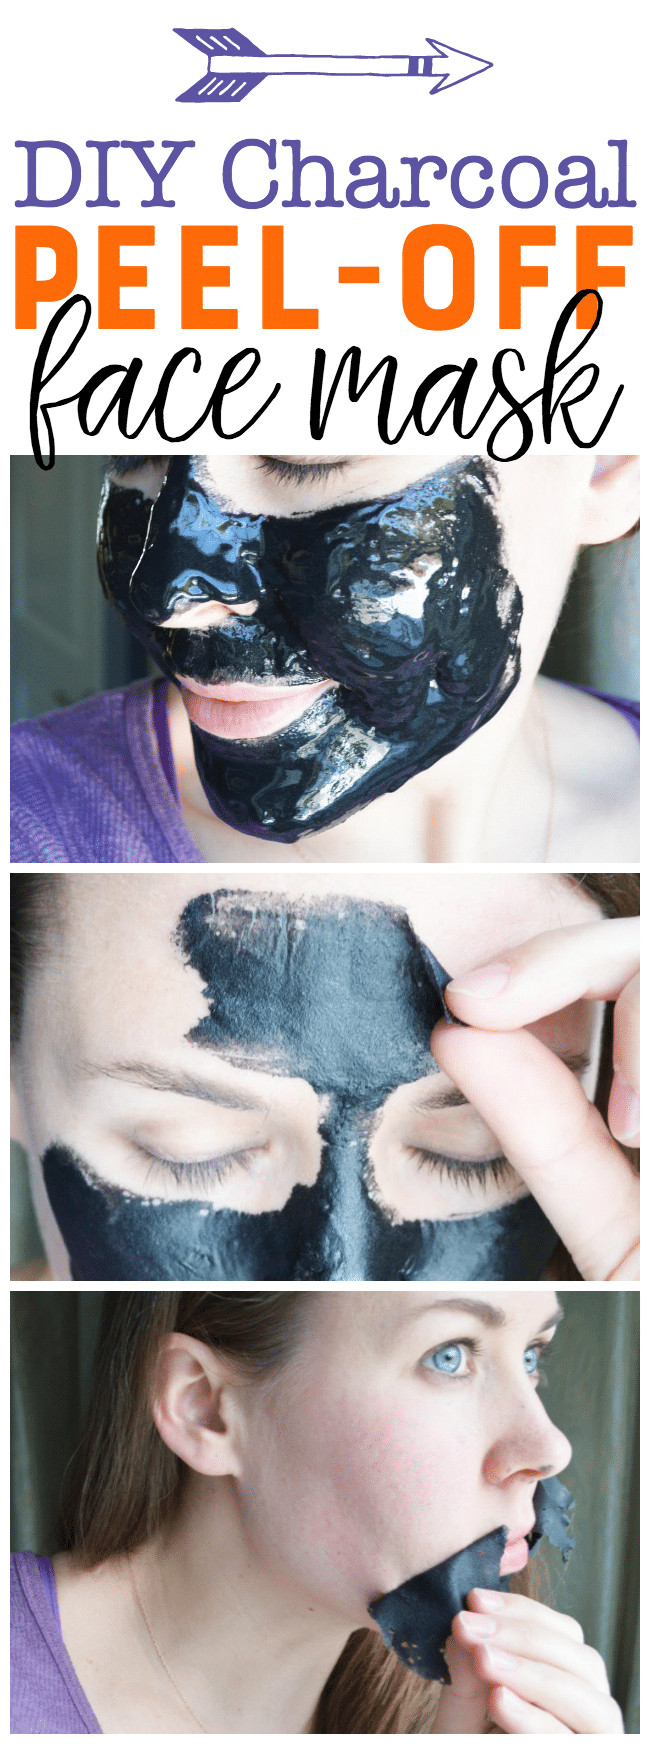 DIY Charcoal Face Mask
 DIY Charcoal Peel f Mask Easy Blackhead Busting Mask